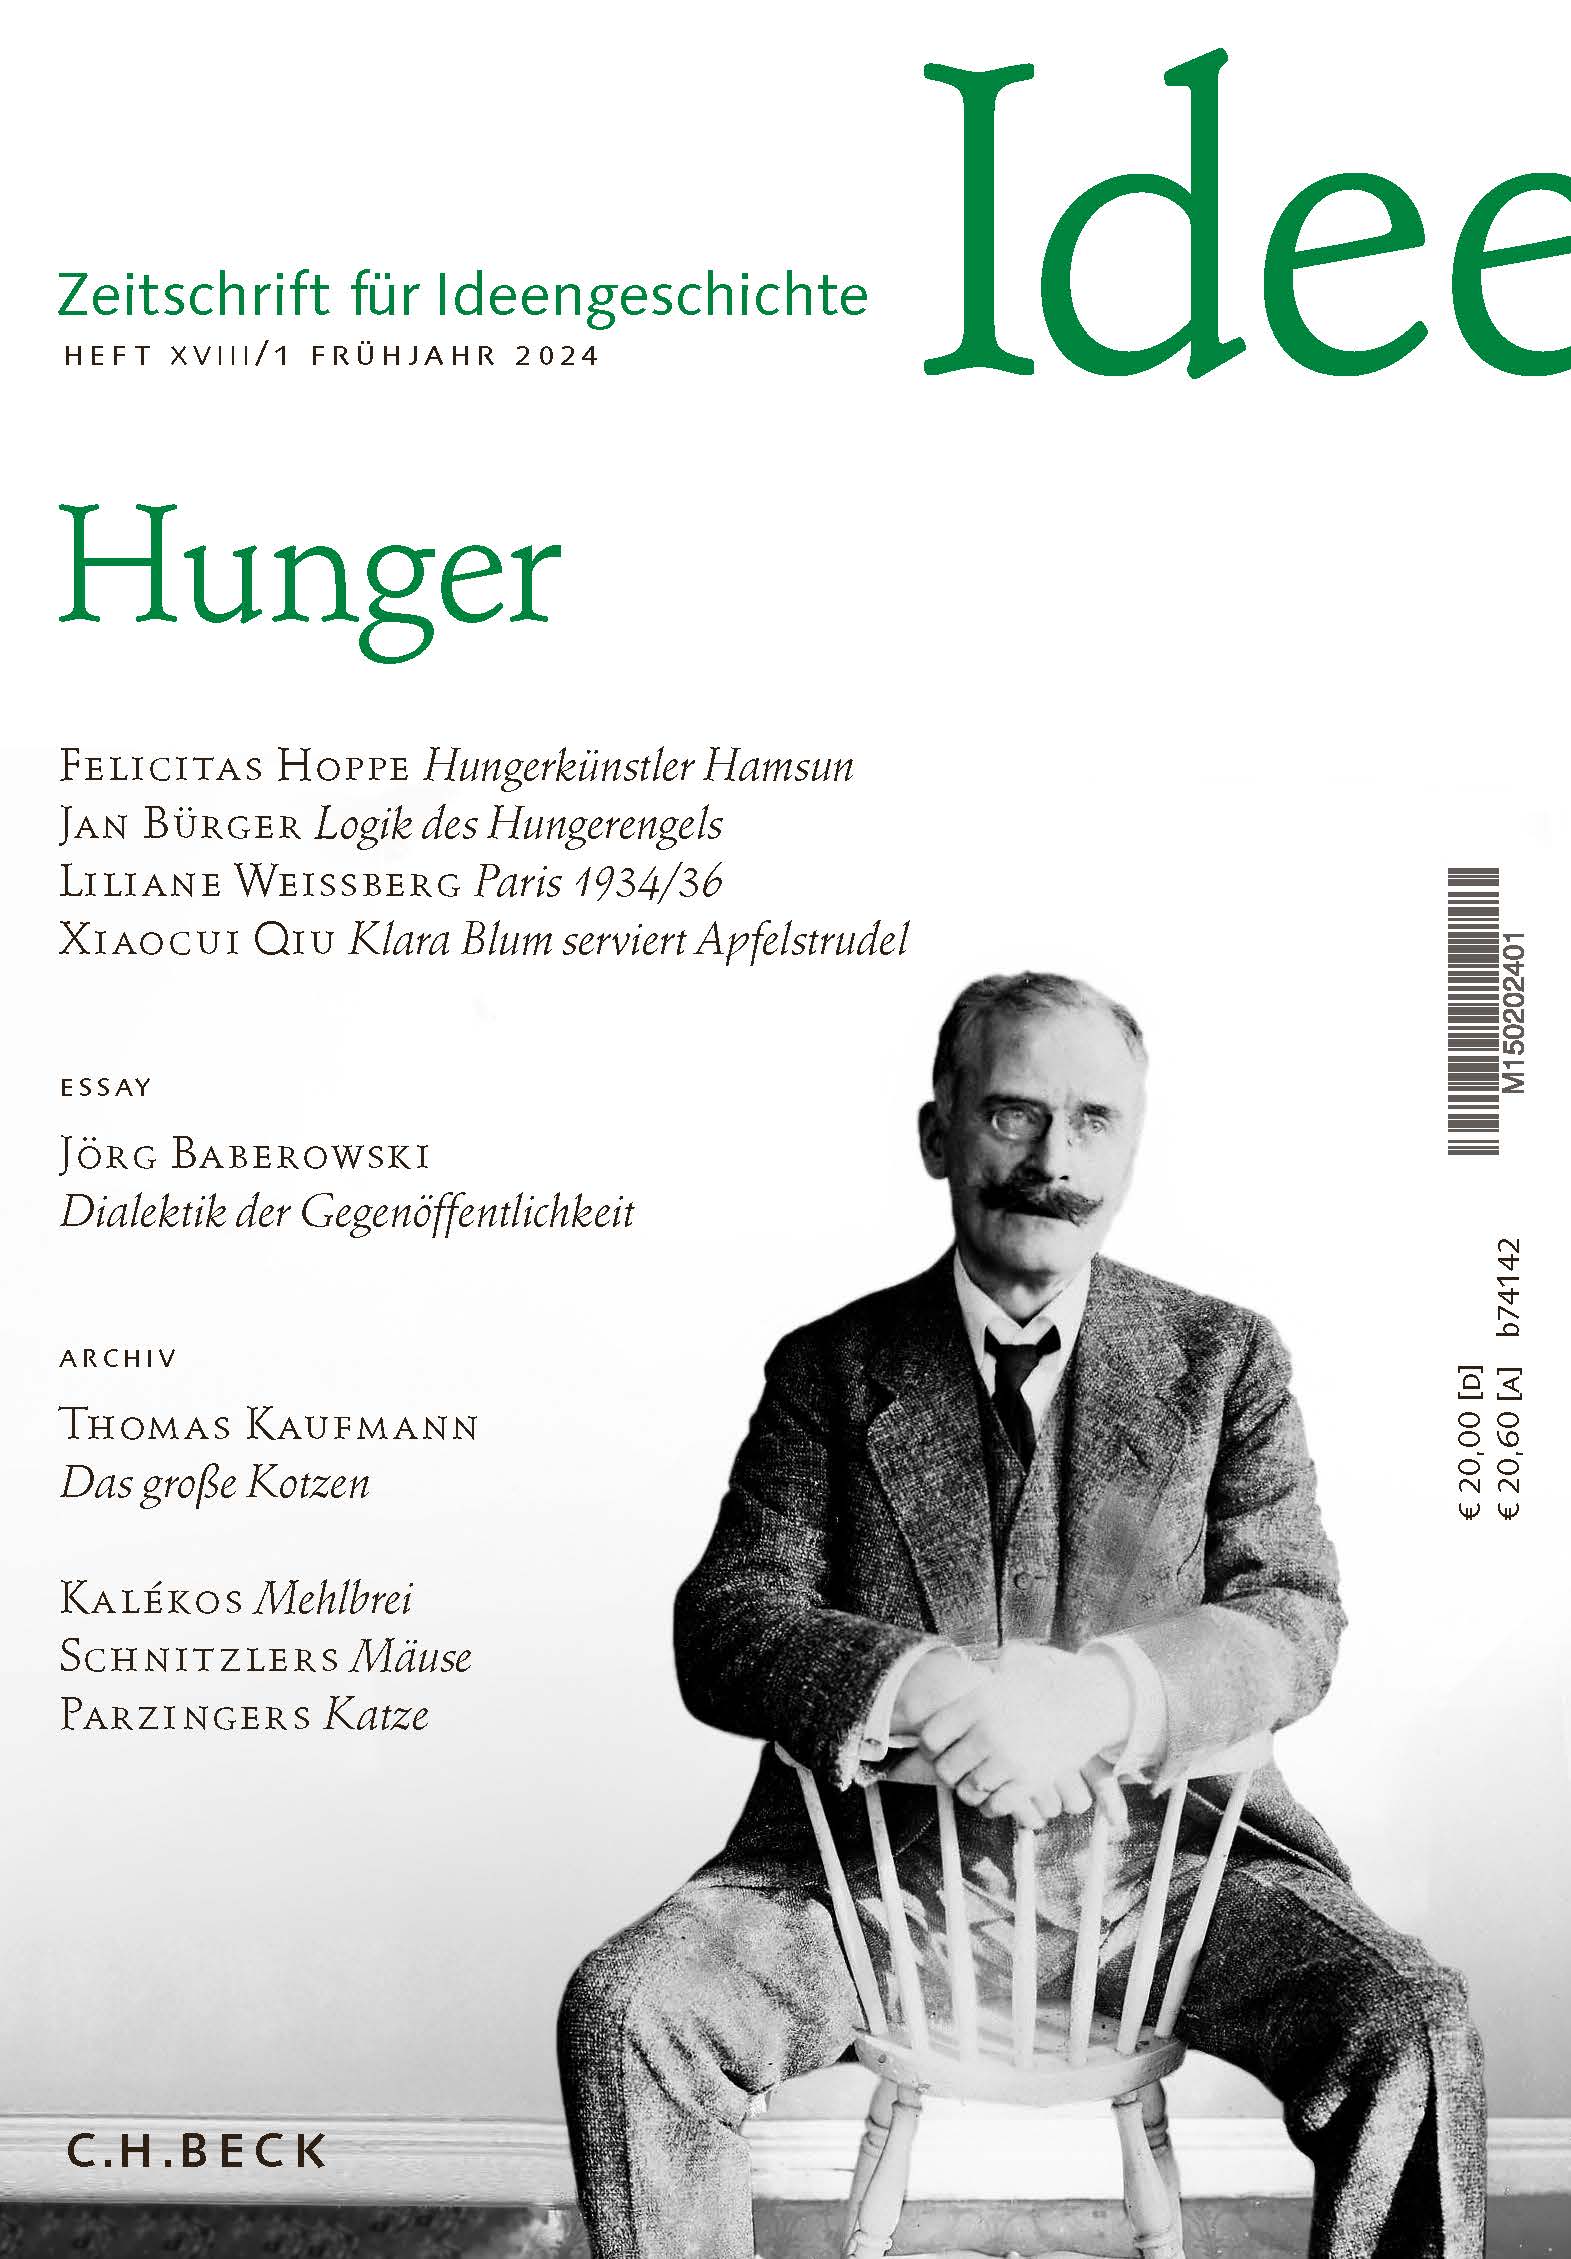 cover of Heft XVIII/1 Frühjahr 2024